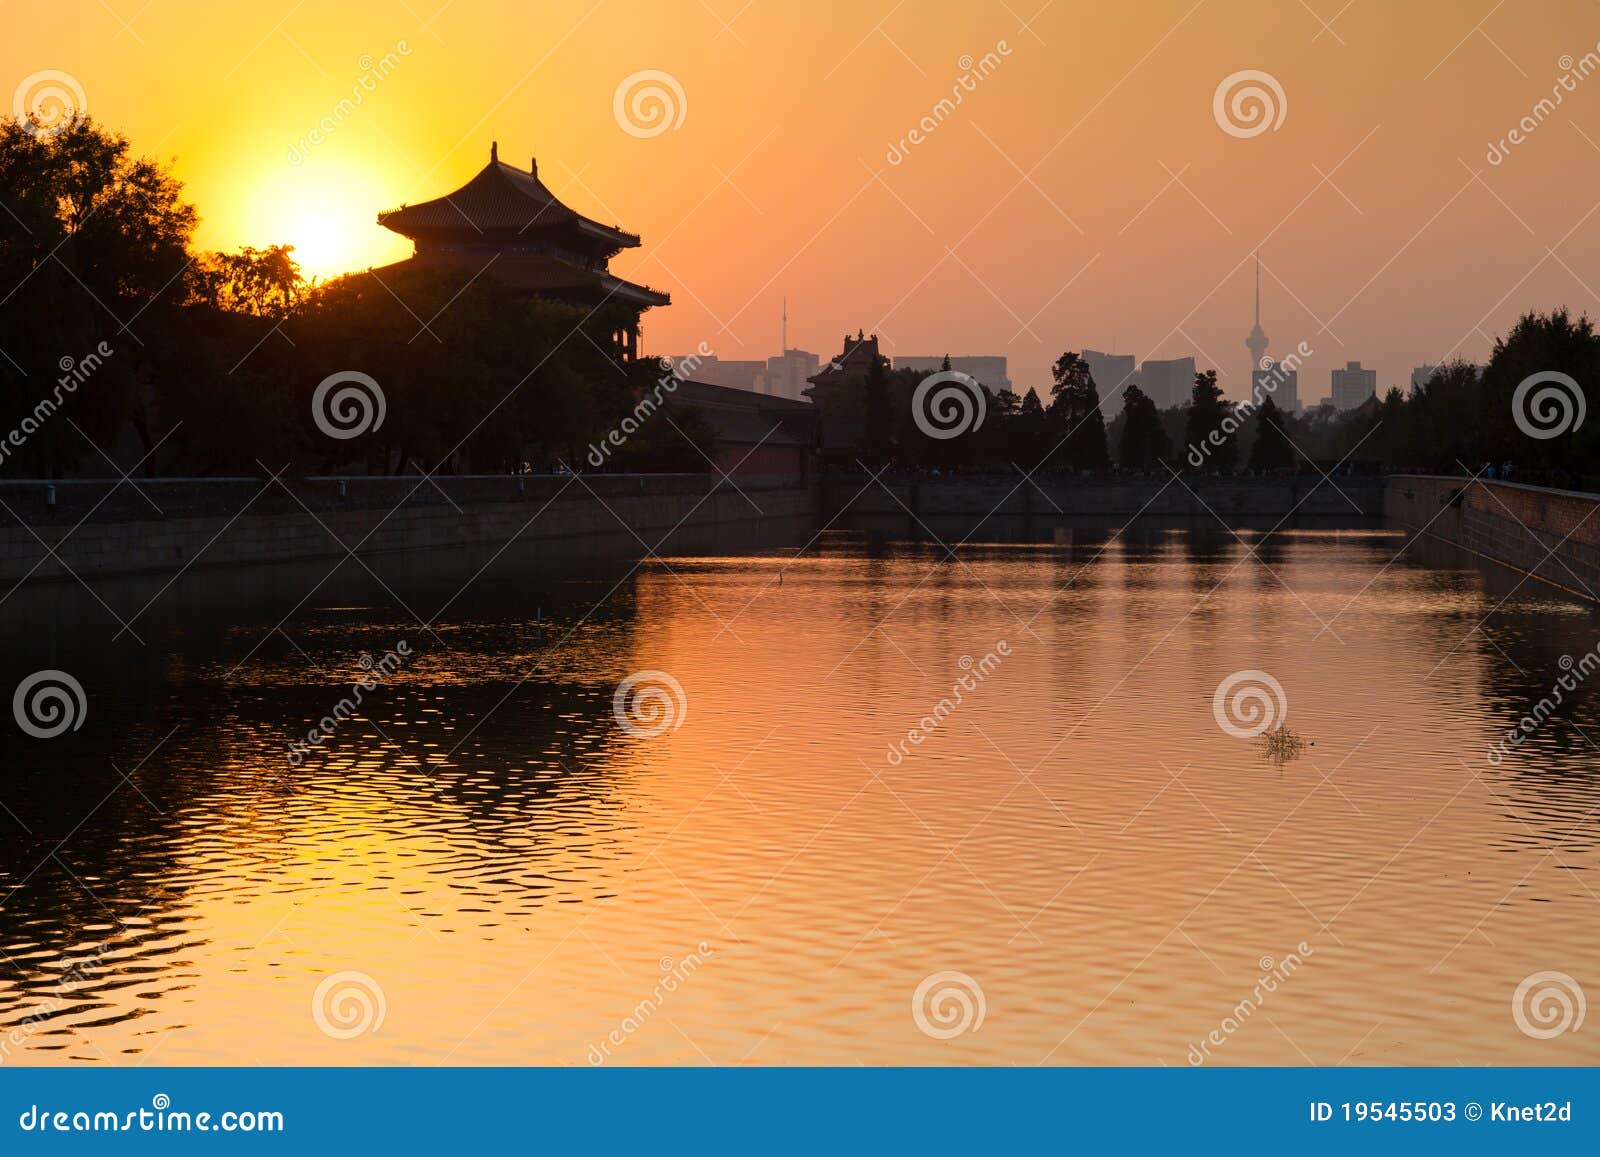 Sunset over forbidden city in Beijing.